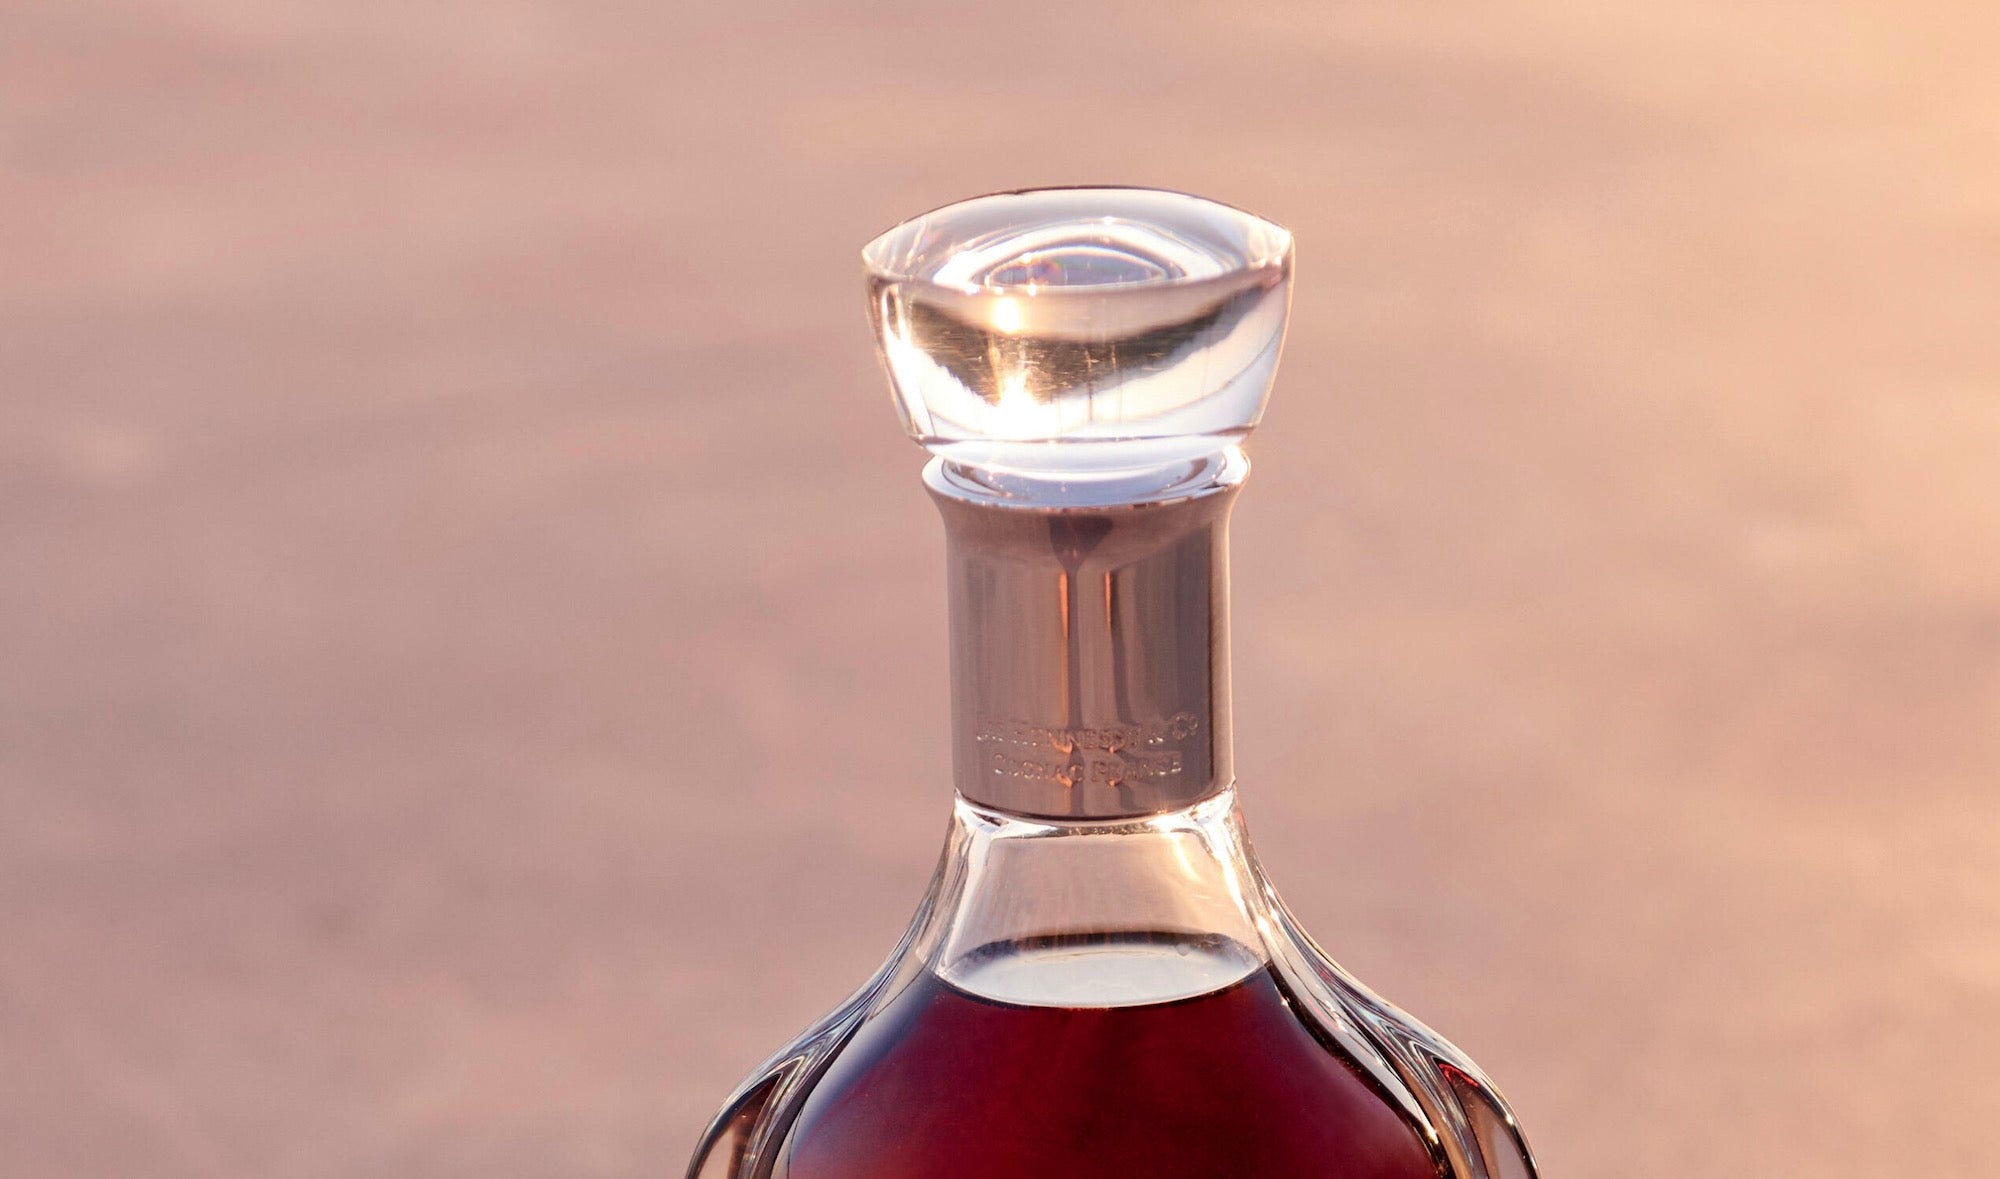 Buy Hennessy Rare Paradis, Cognac